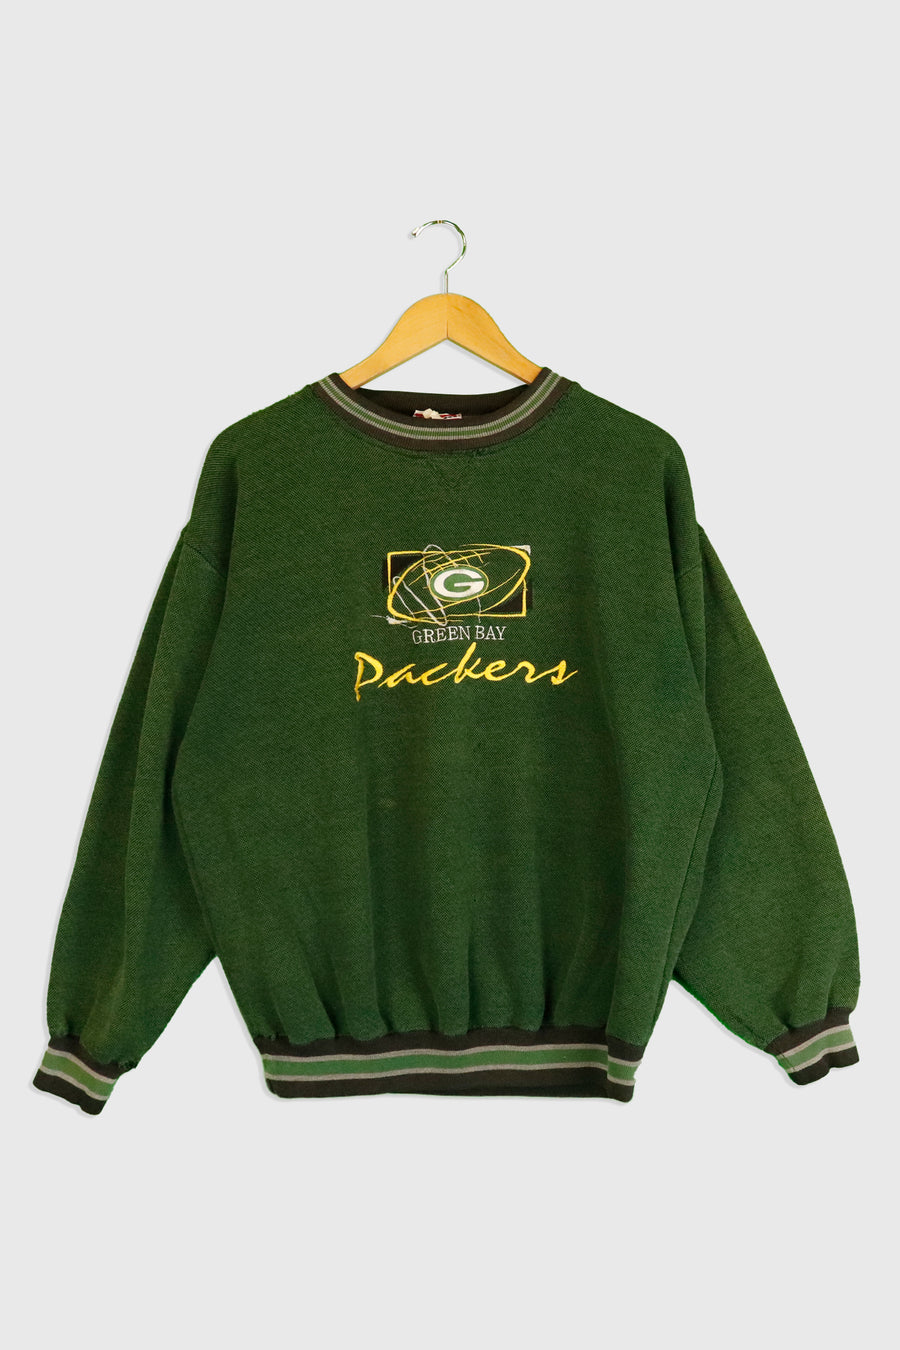 Vintage Green Bay Packers Embroidered Logo Crewneck Sweatshirt Sz S